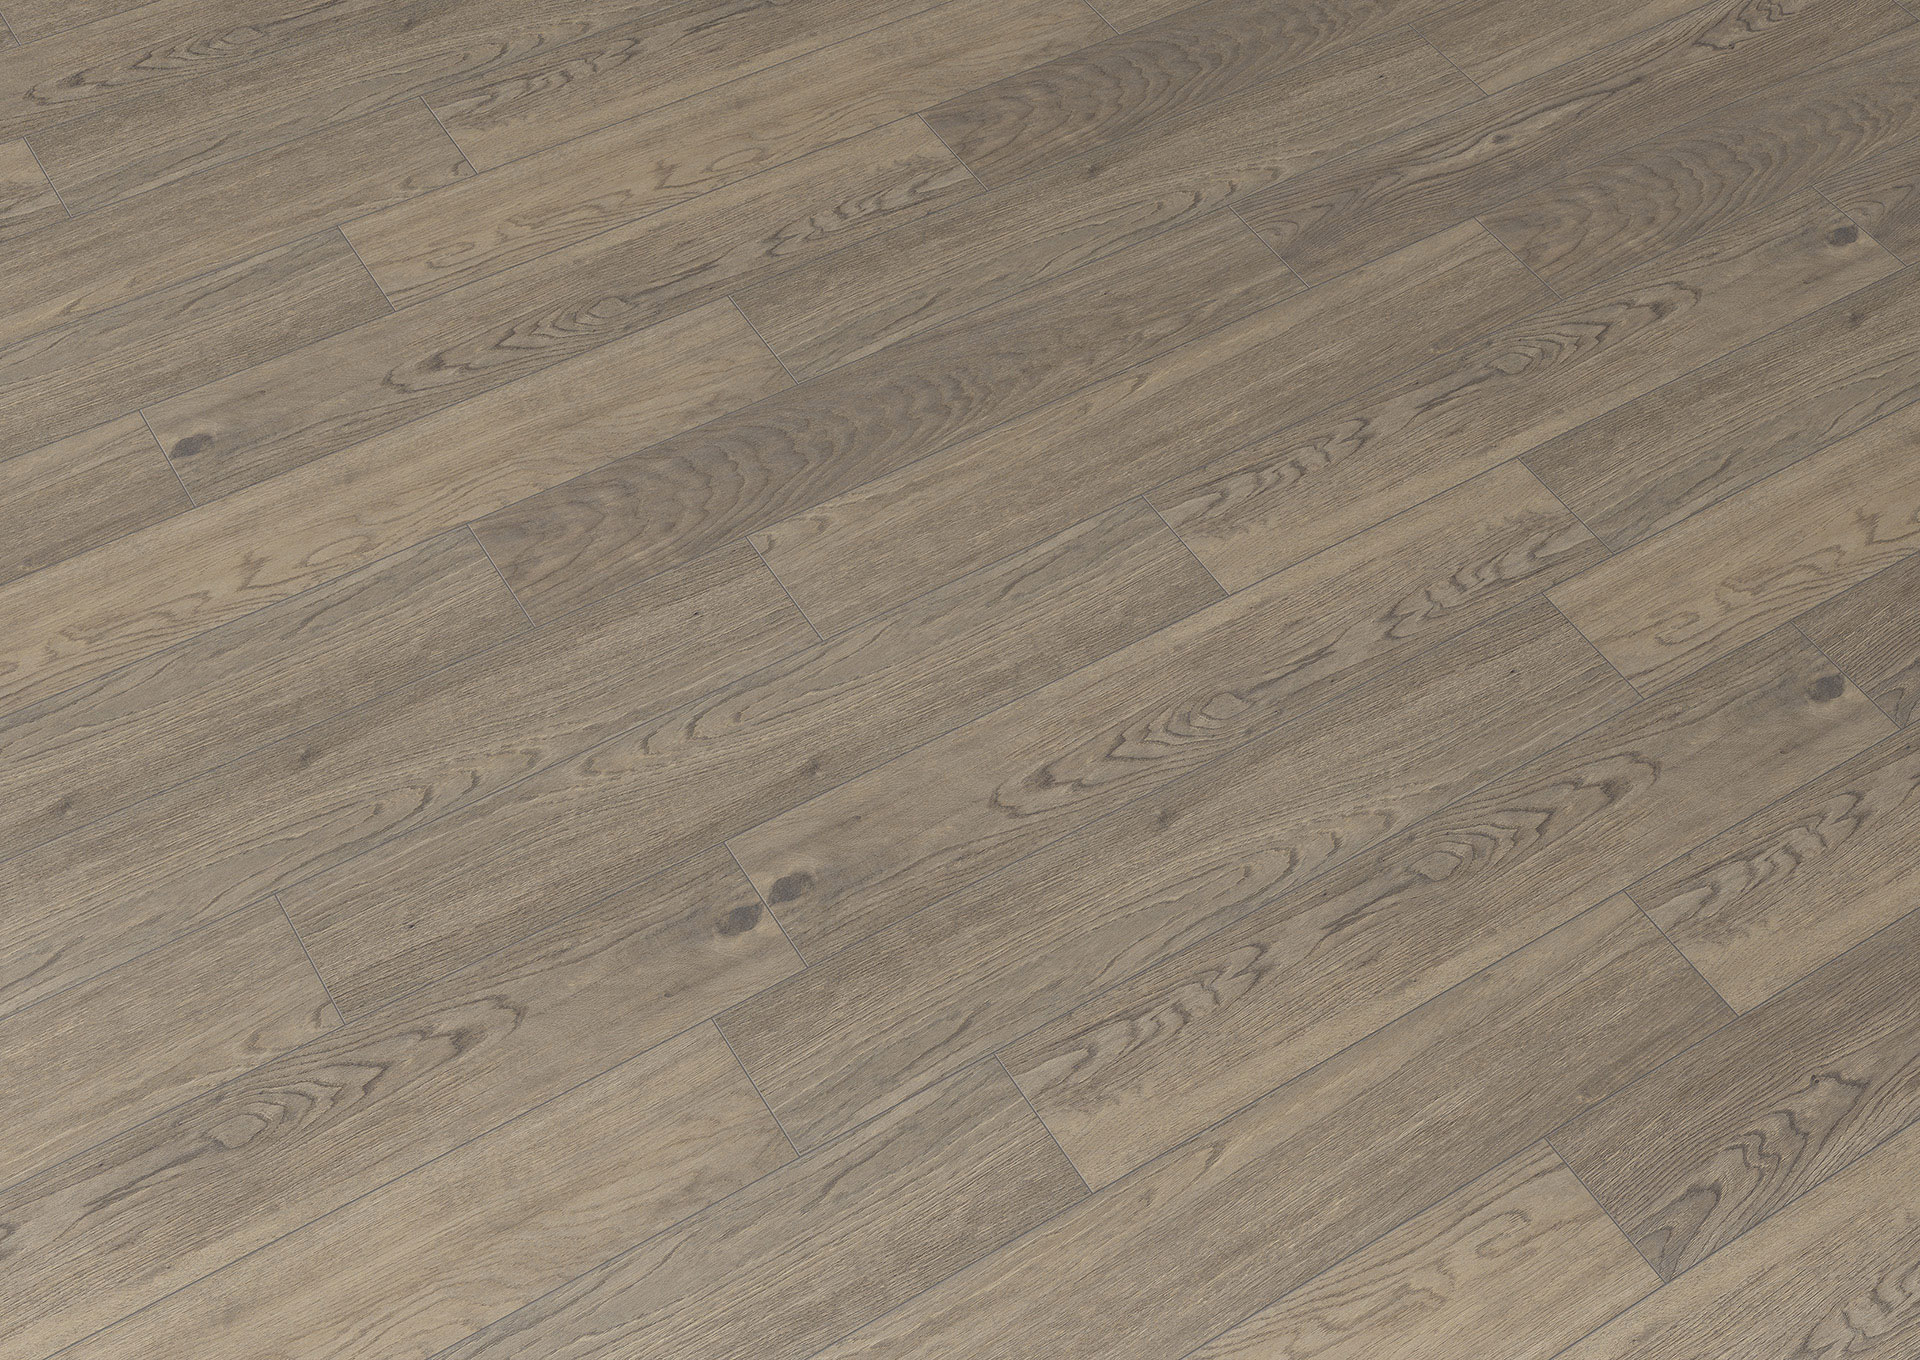 06 Summerville beige 20x120 flooring, 6mm